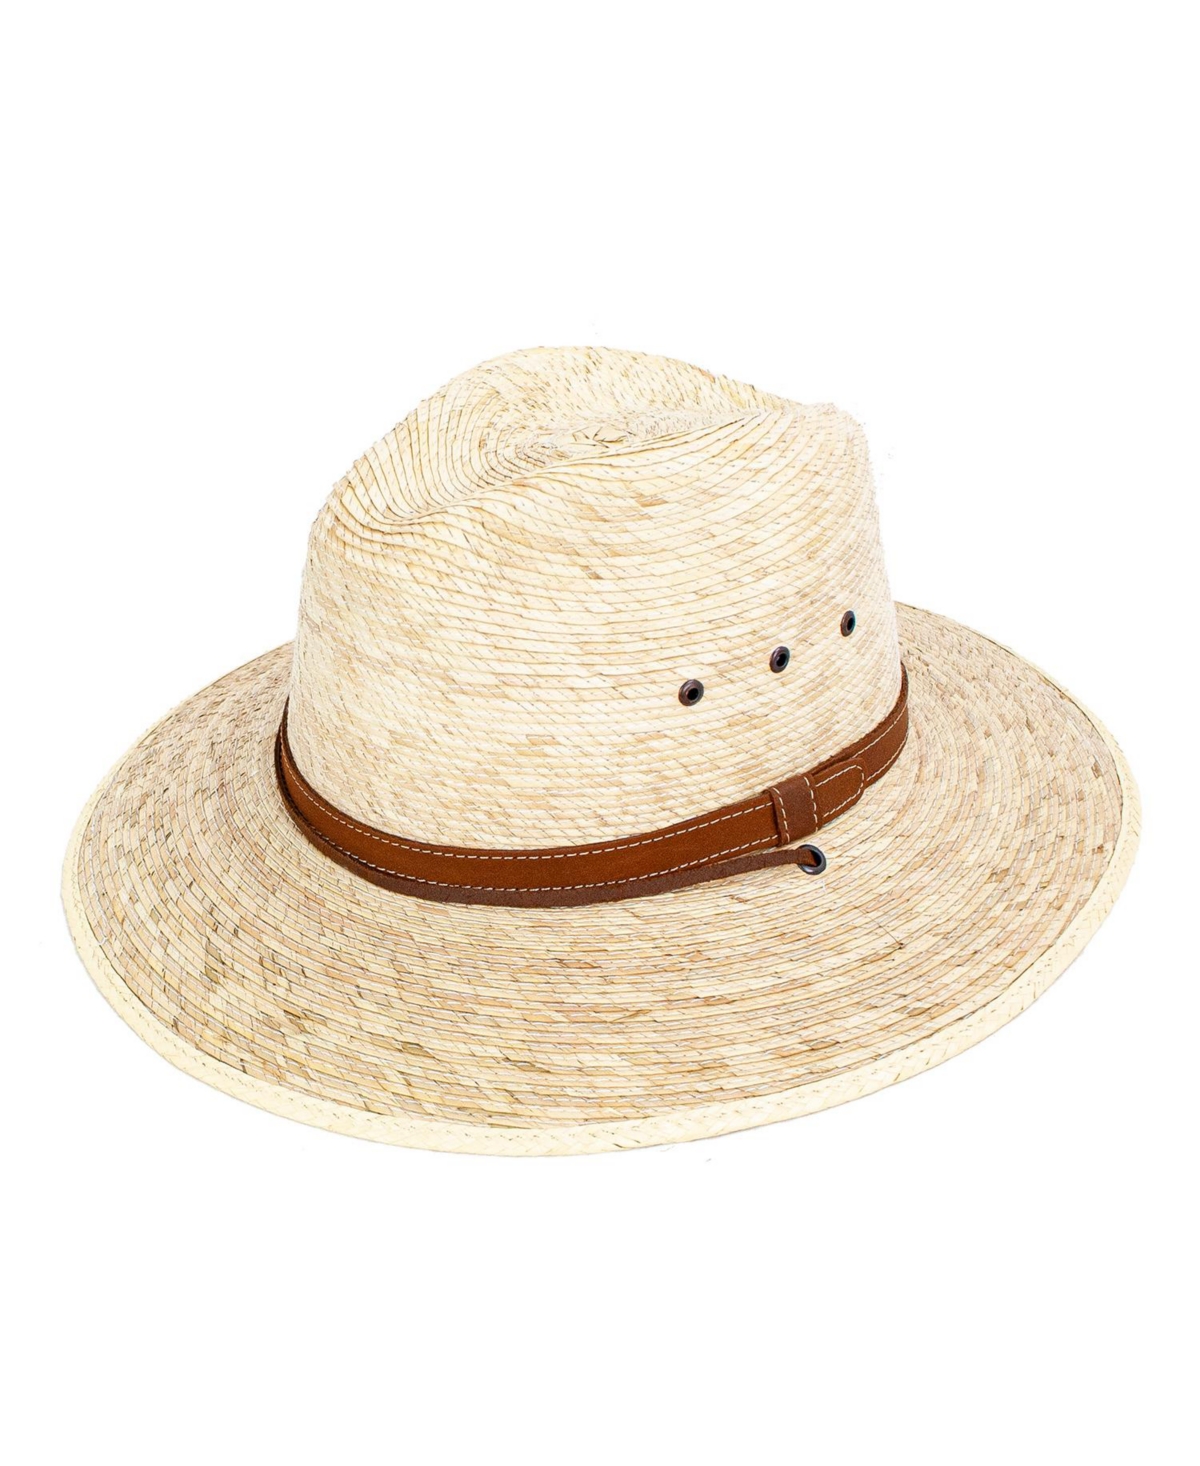 Ajo Woven Straw Resort Hat - Natural